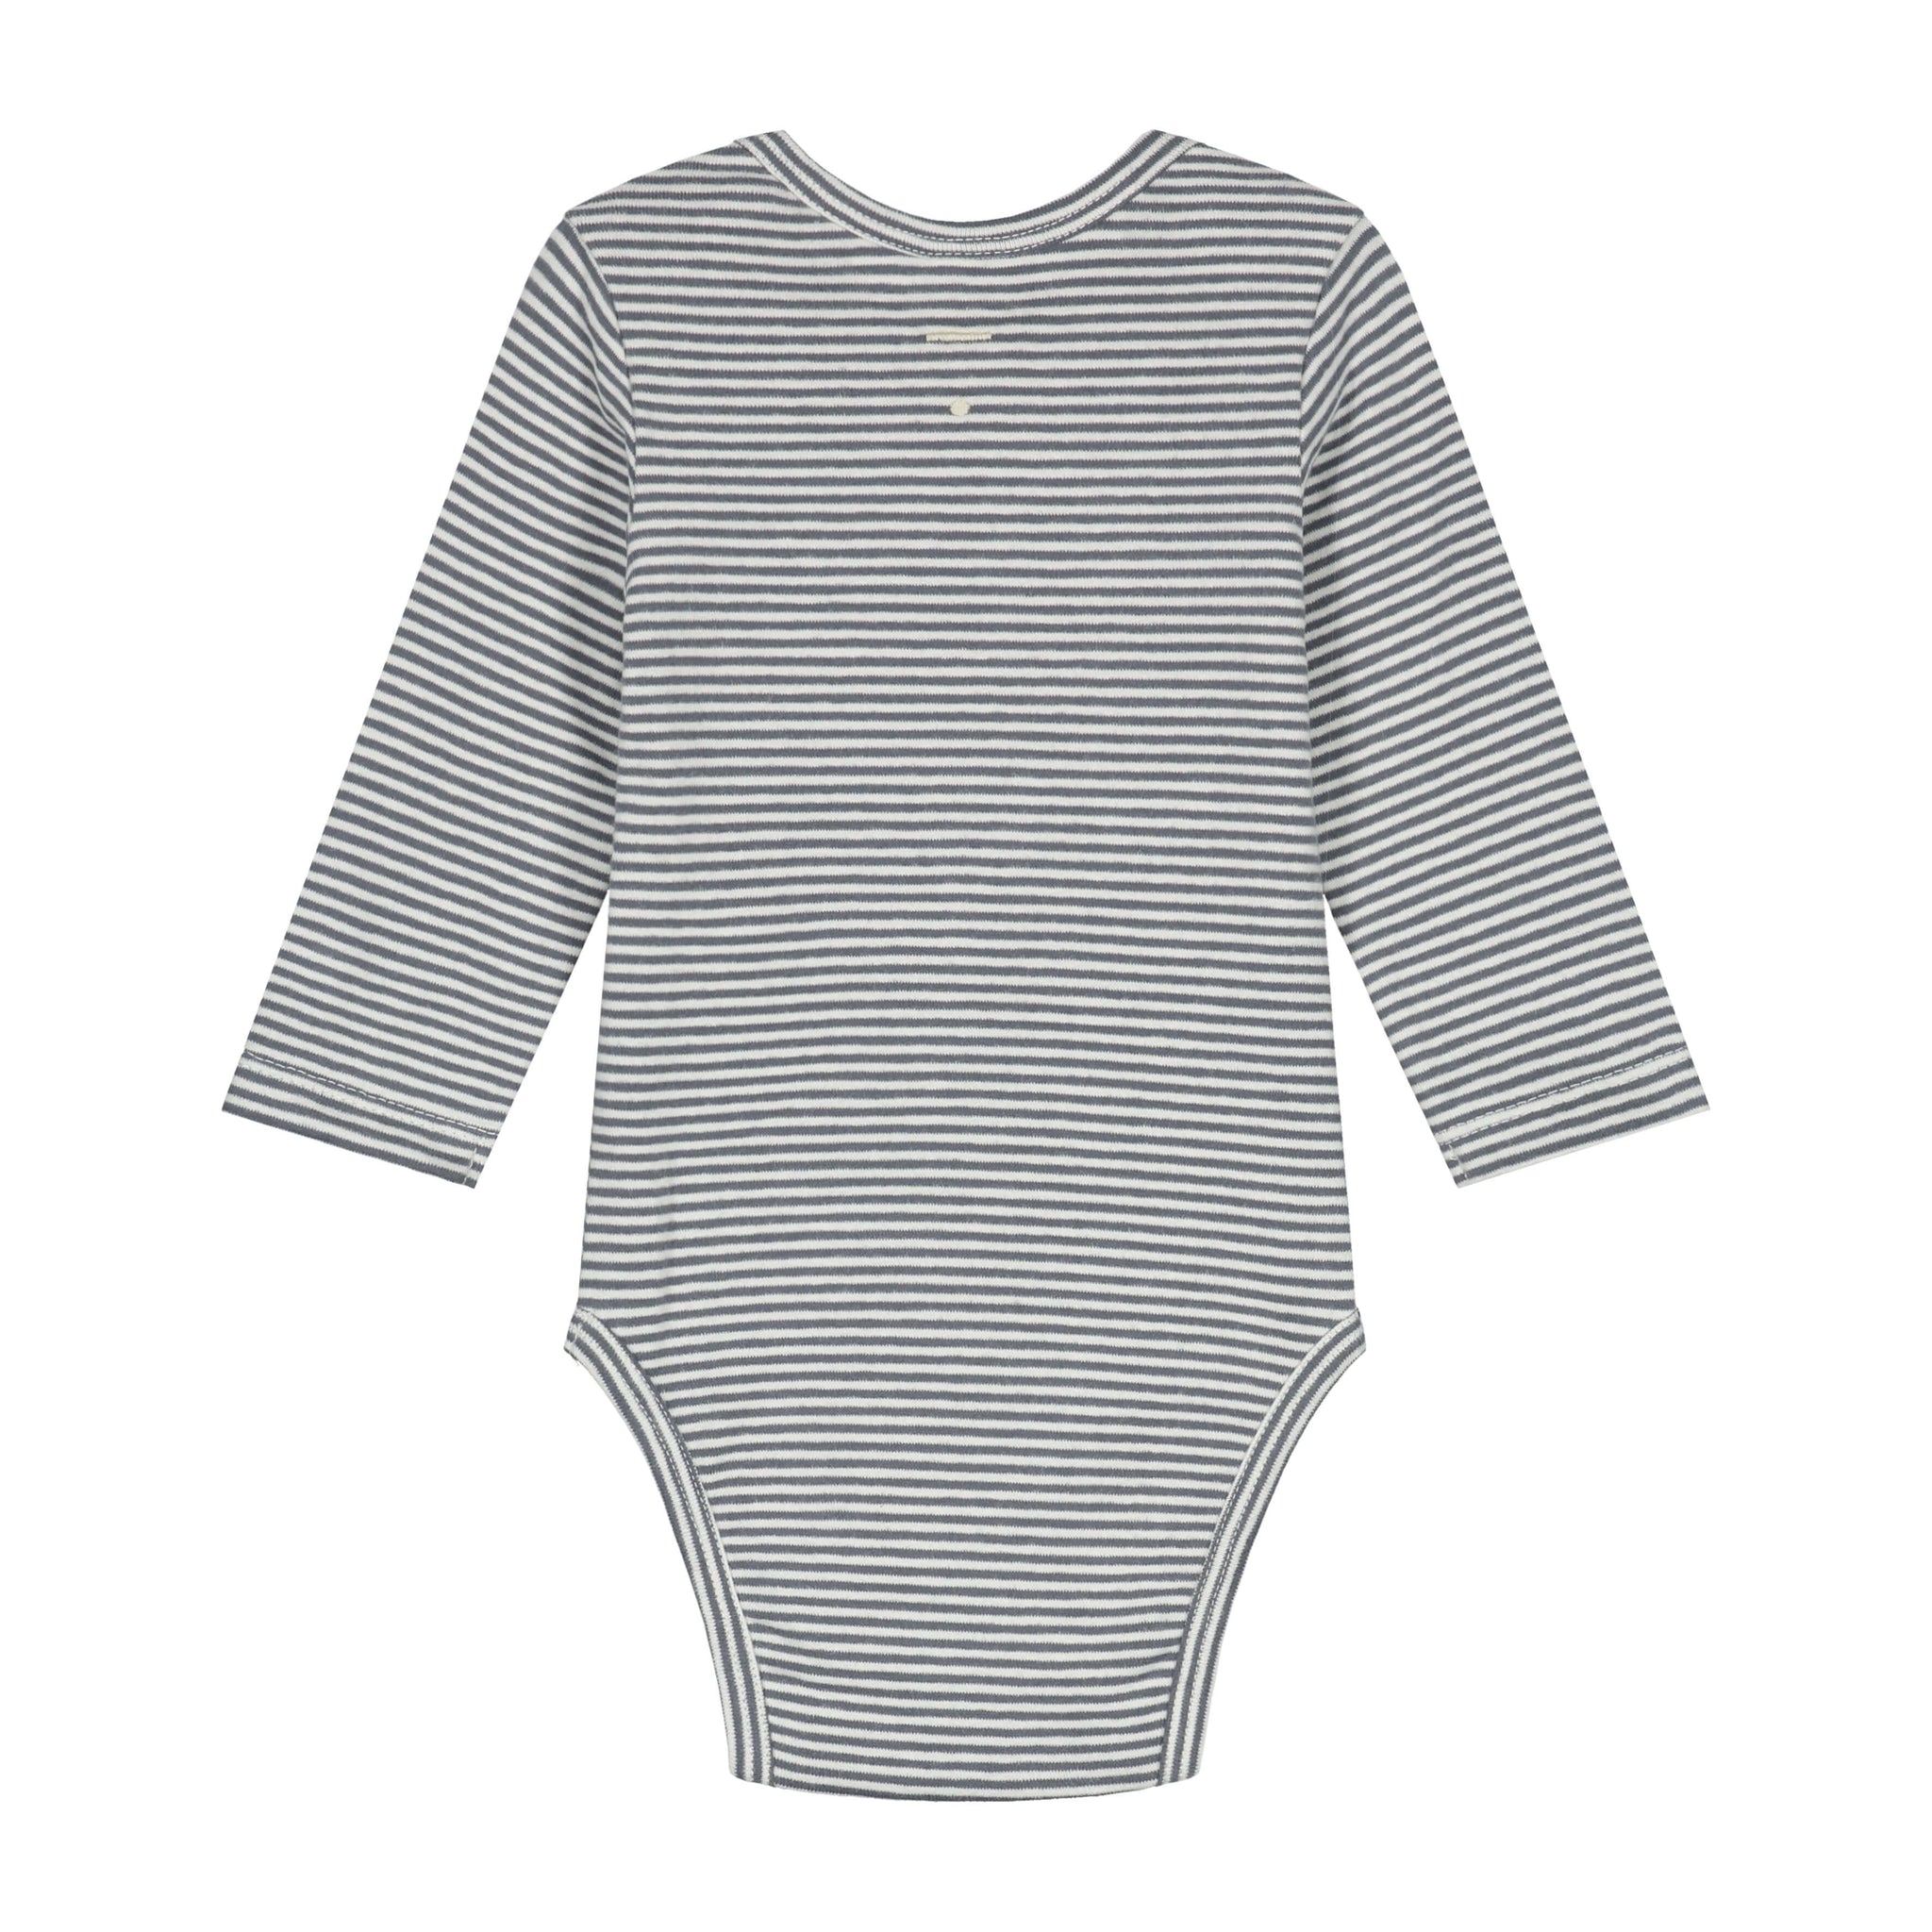 Molemin | % Baby longsleeve Onesie Stripes | von Gray Label